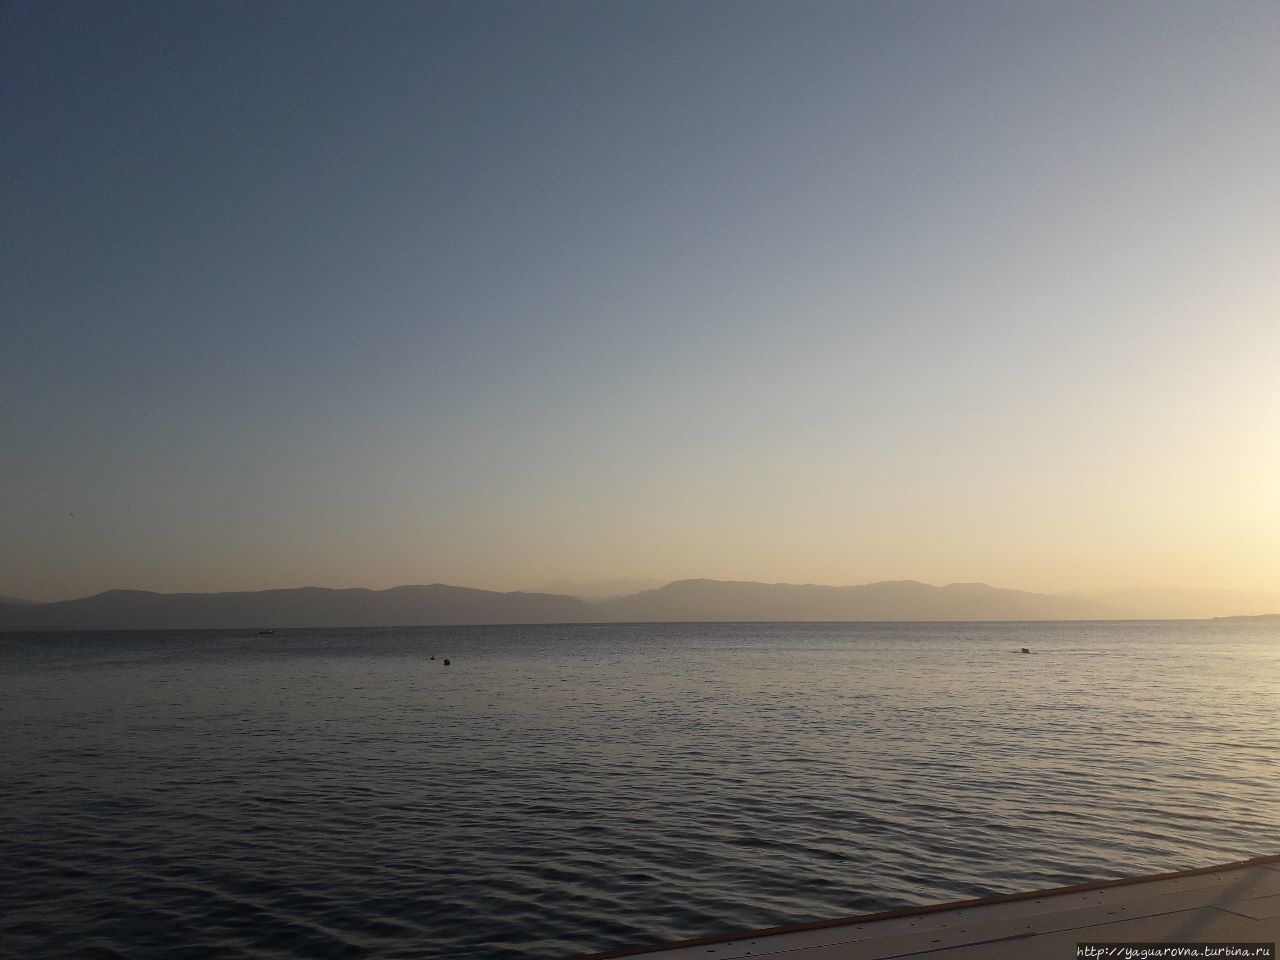 вечер на море Эдипсос, остров Эвбея, Греция